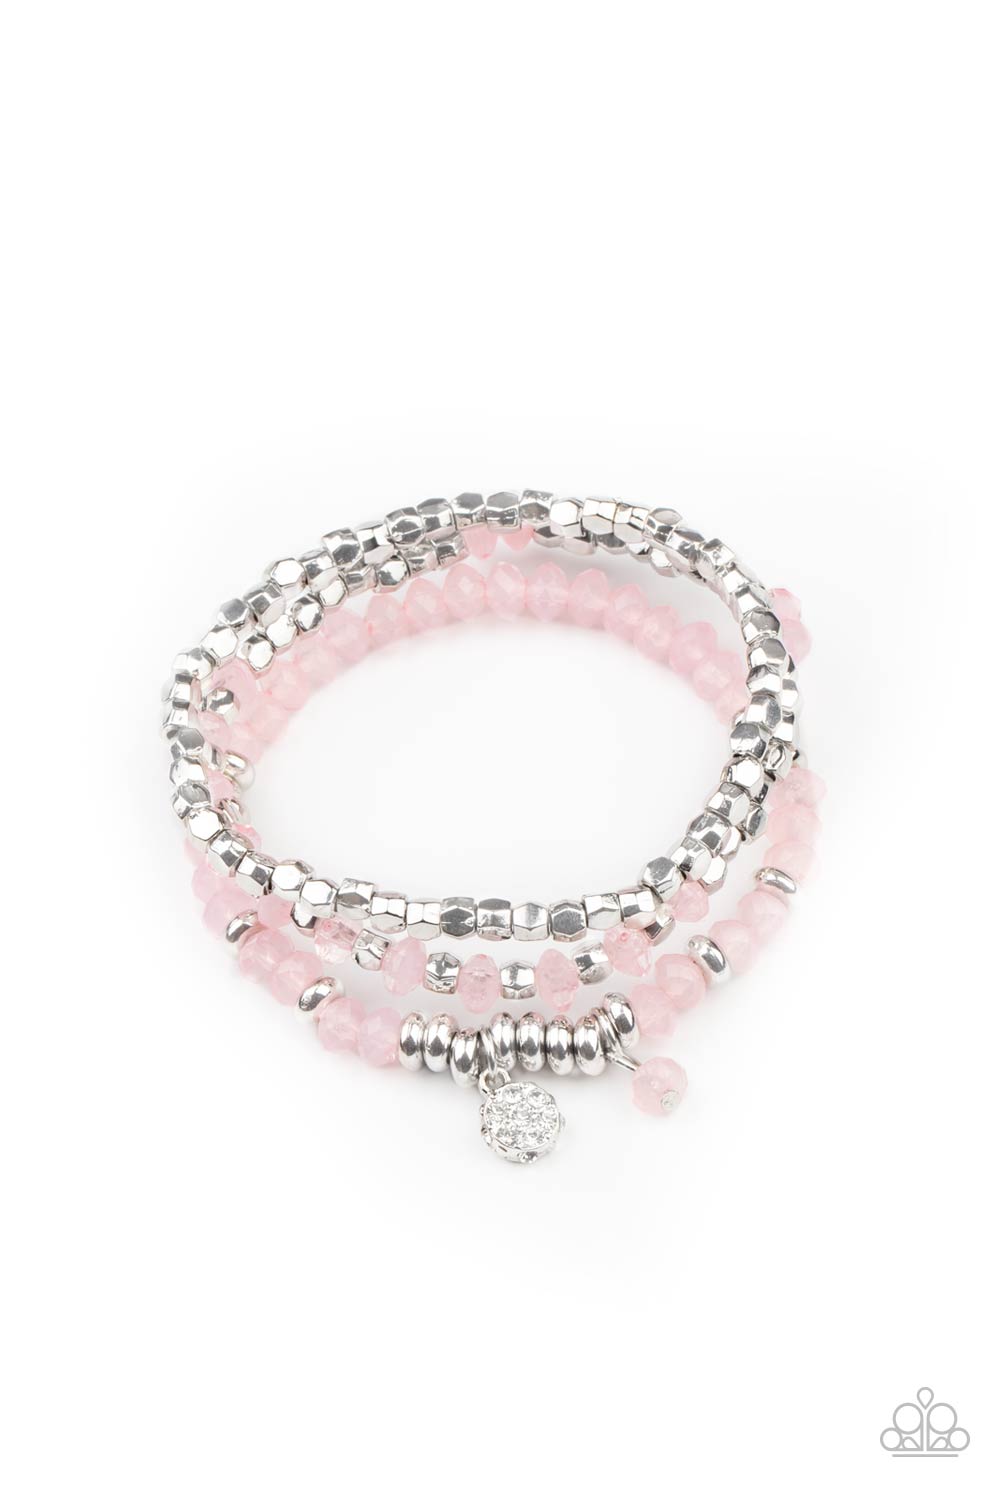 Paparazzi Glacial Glimmer - Pink Bracelet - Charm Bracelet Paparazzi jewelry images